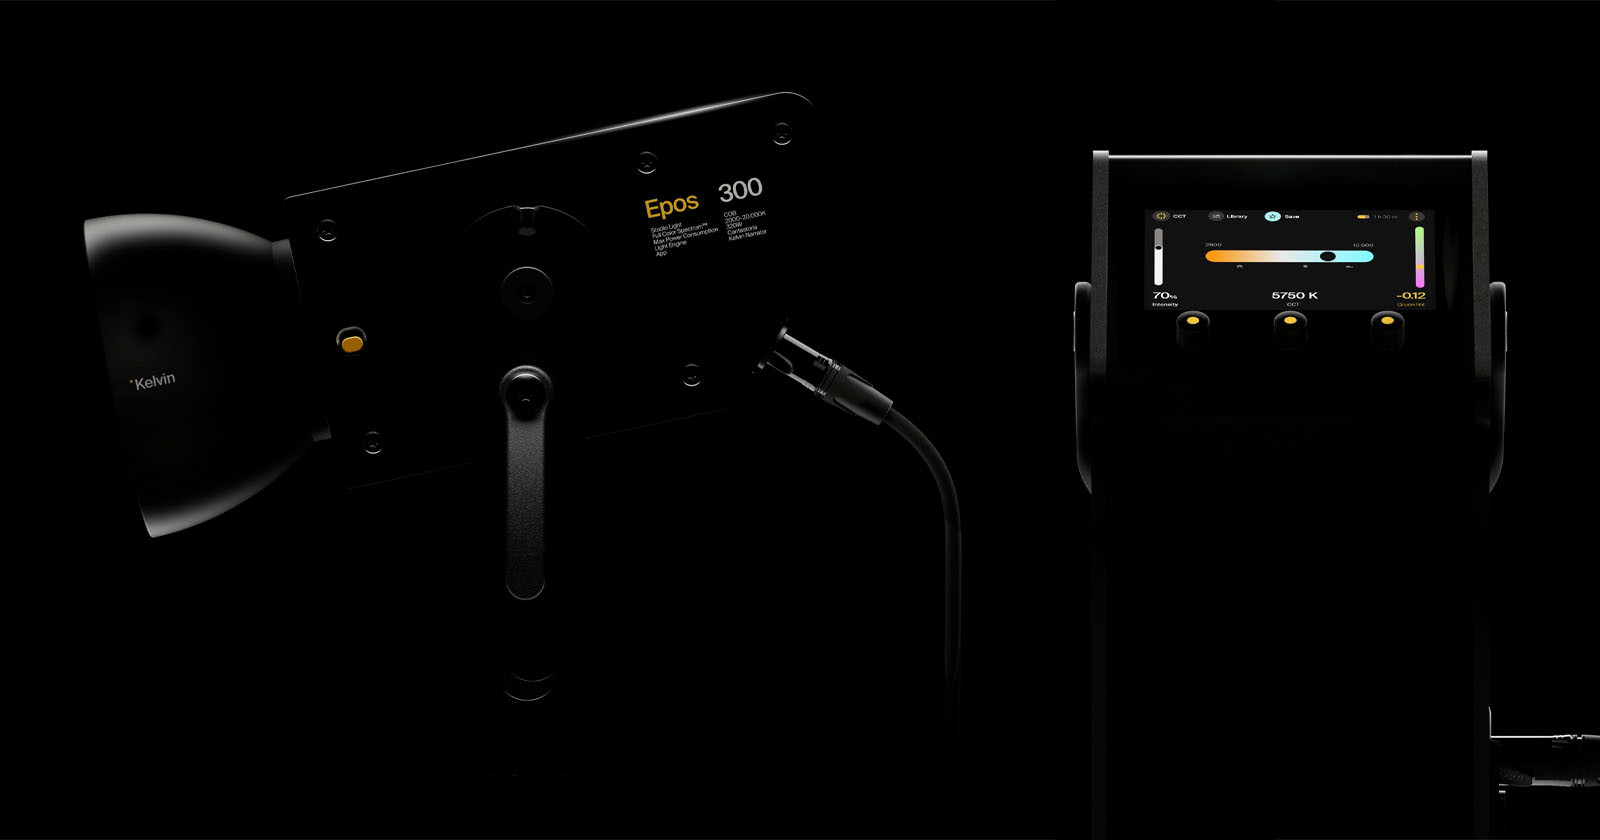 The Kelvin Epos 300 is a New Super-Durable Full RGB 300W Studio LED